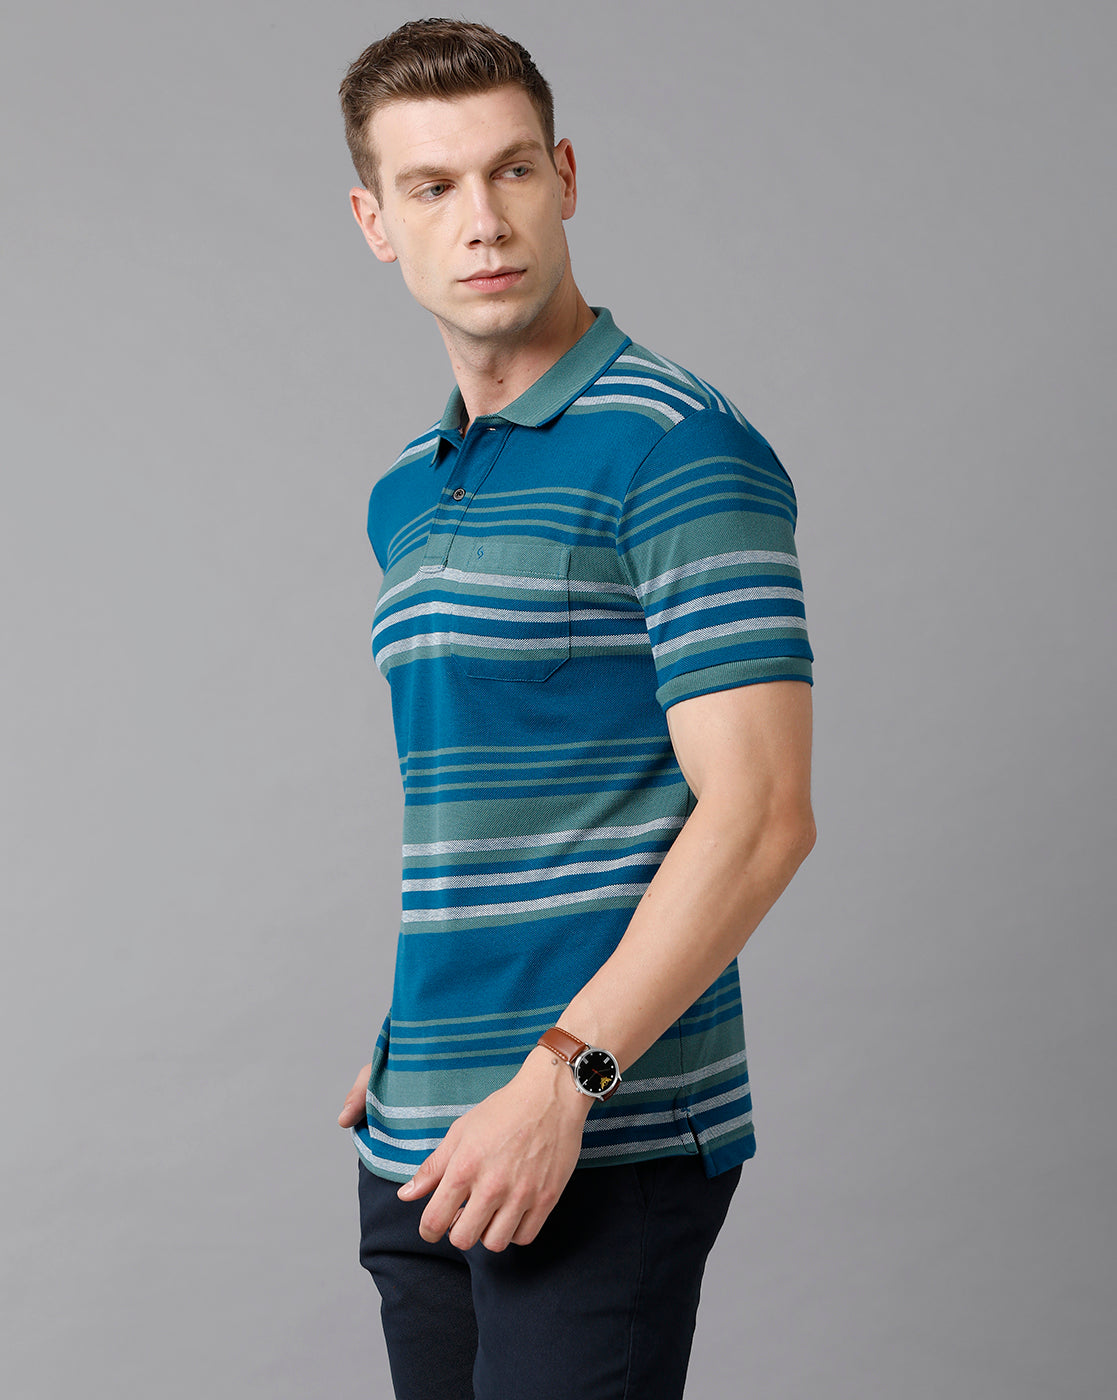 Classic Polo Men's Cotton Blend Striped Slim Fit Multicolor T-Shirt | Adore - 174 B